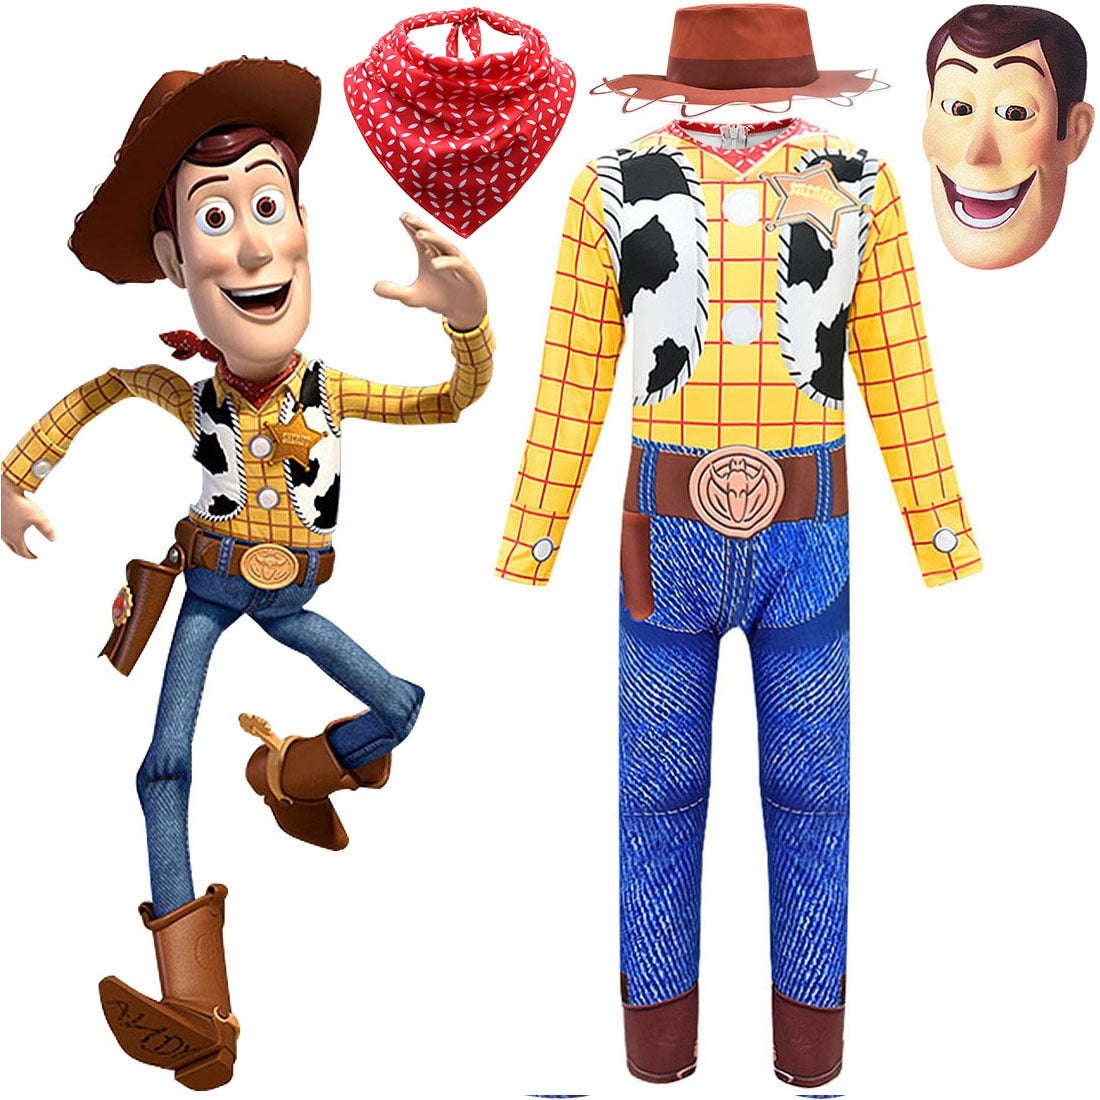 Toy Story Woody, Buzz Lightyear, Jessie  Kids Jumpsuit Cosplay Halloween Costume